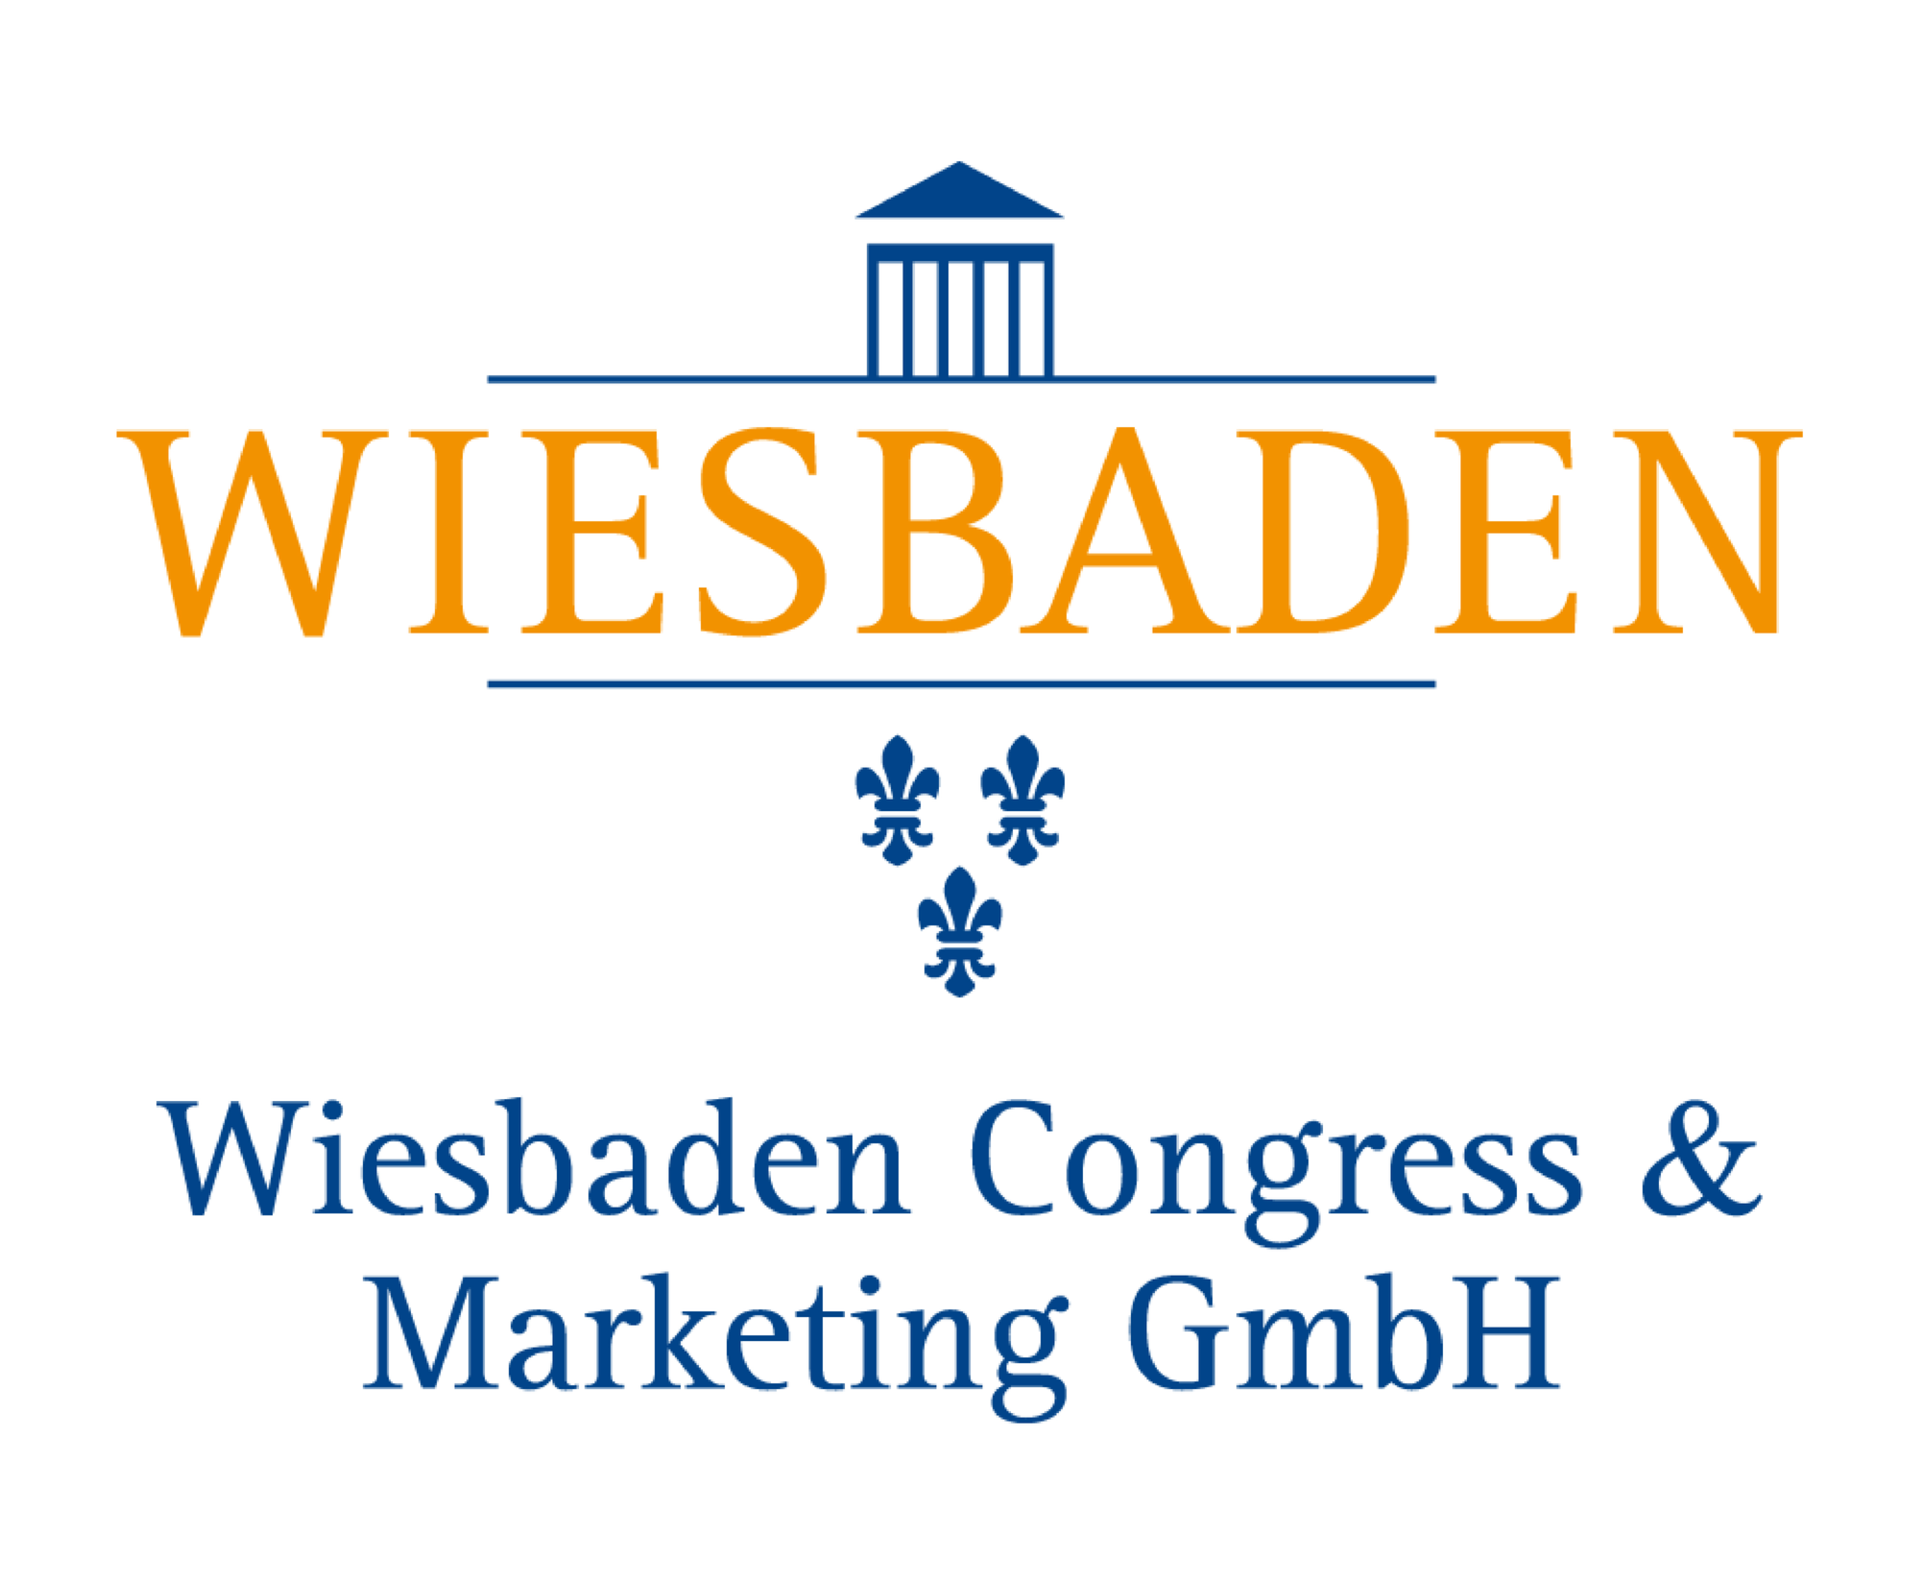 Logo Wiesbaden Congress & Marketing GmbH